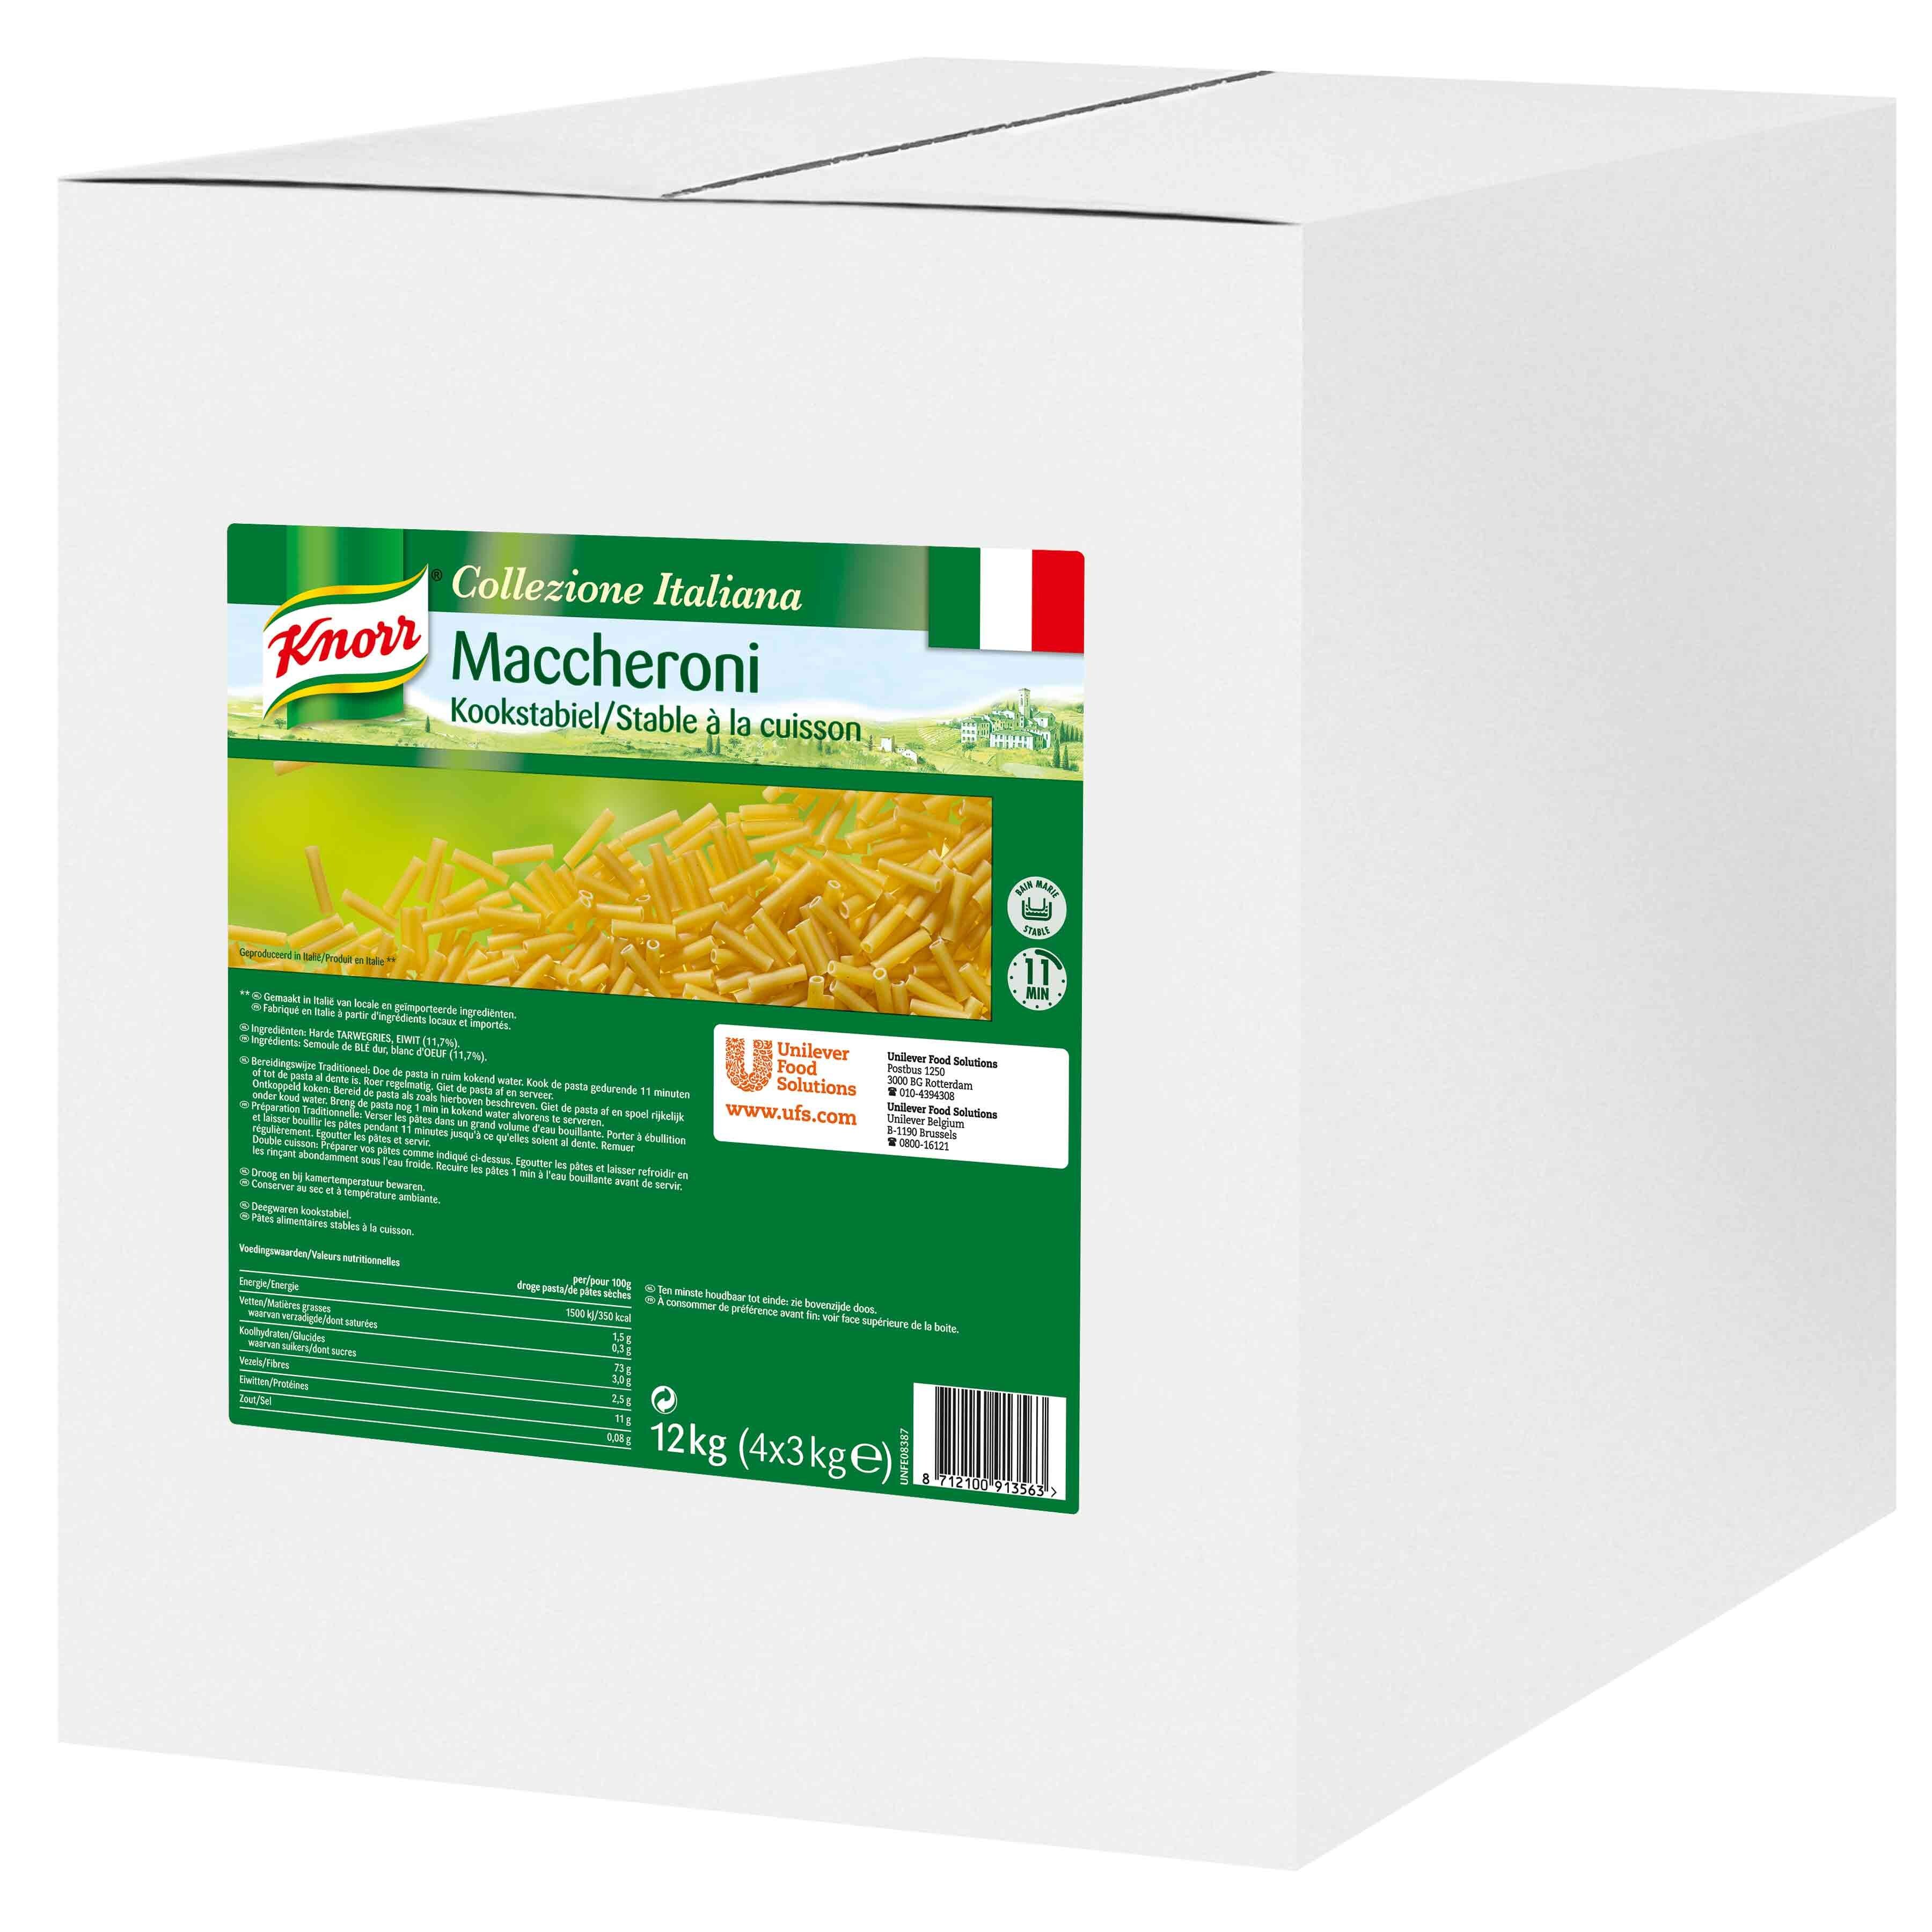 Knorr Maccheroni 12kg Collezione Italiana Cooking Stable Pasta